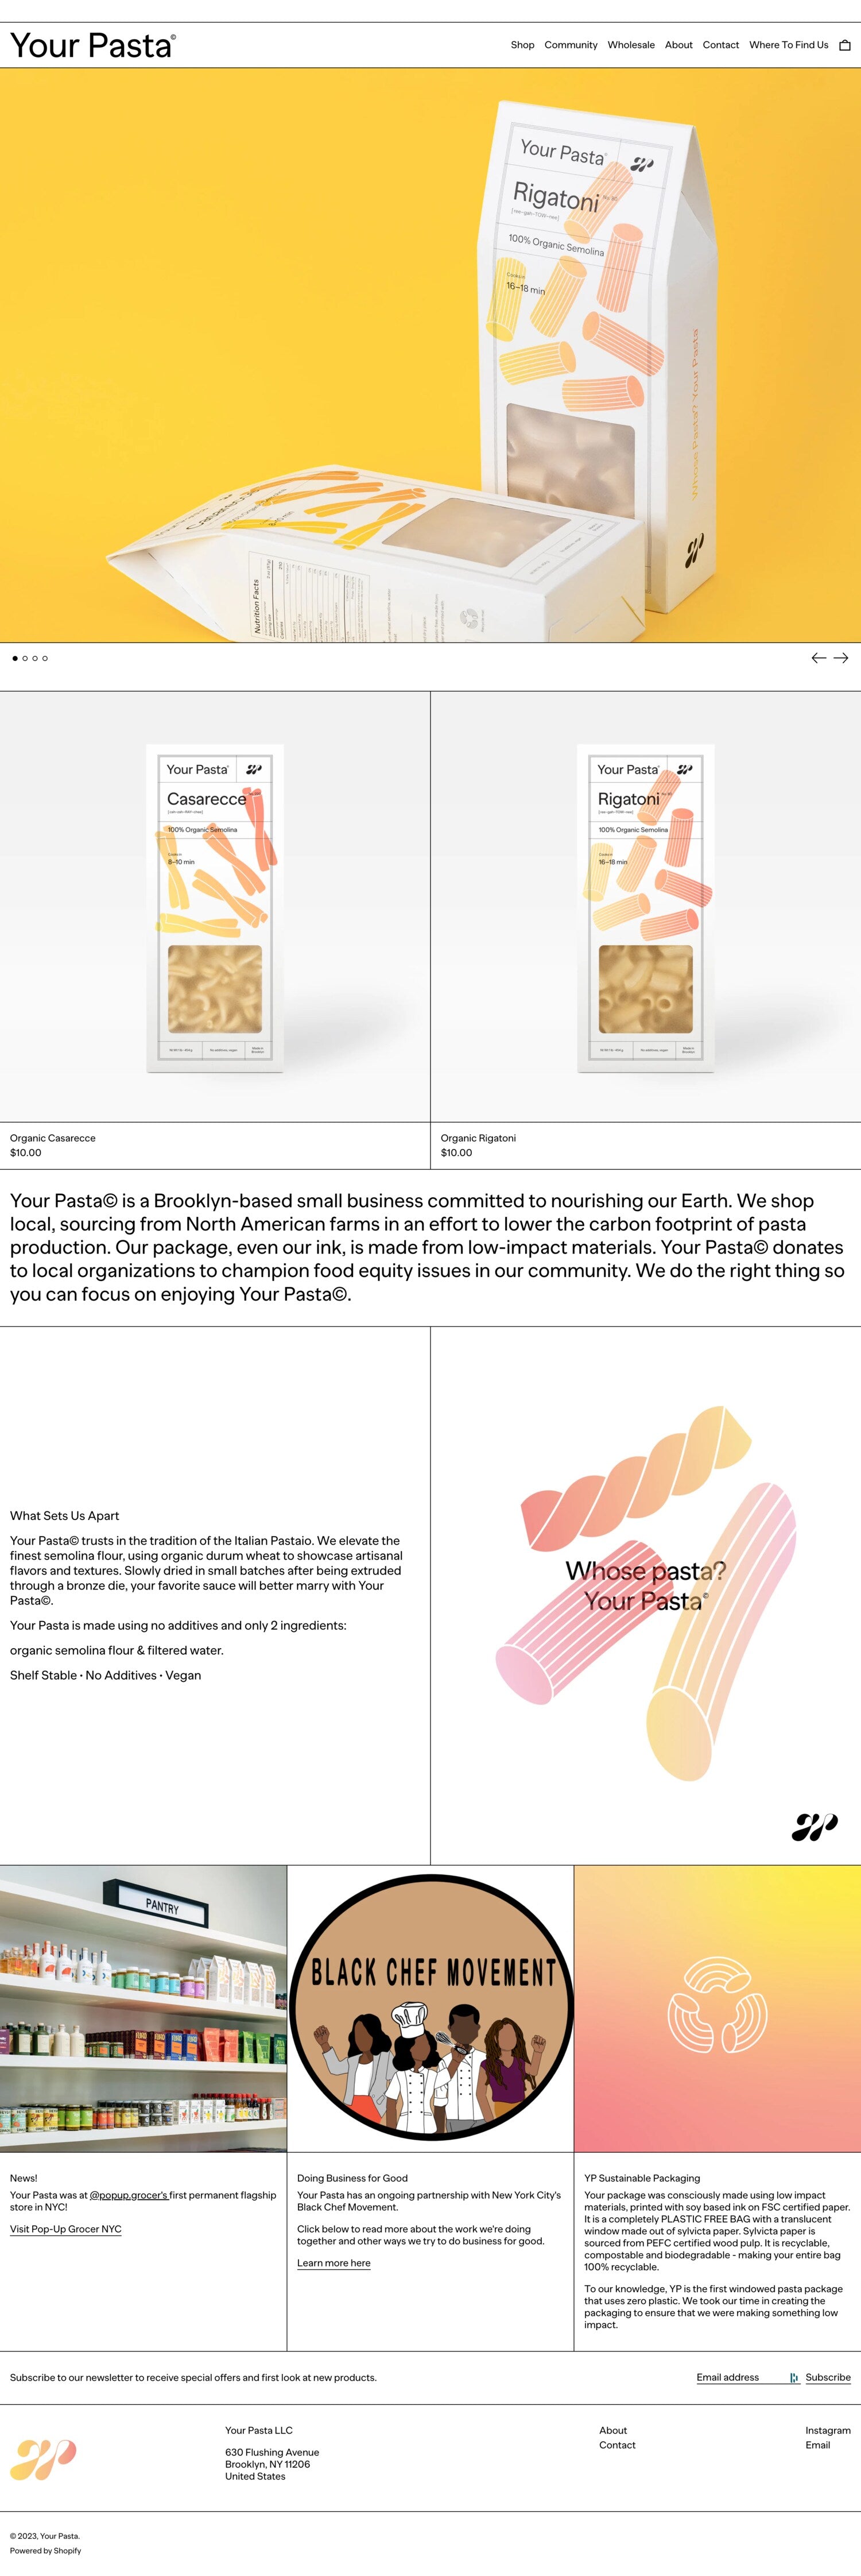 Shopify Website Design Inspiration - Your Pasta